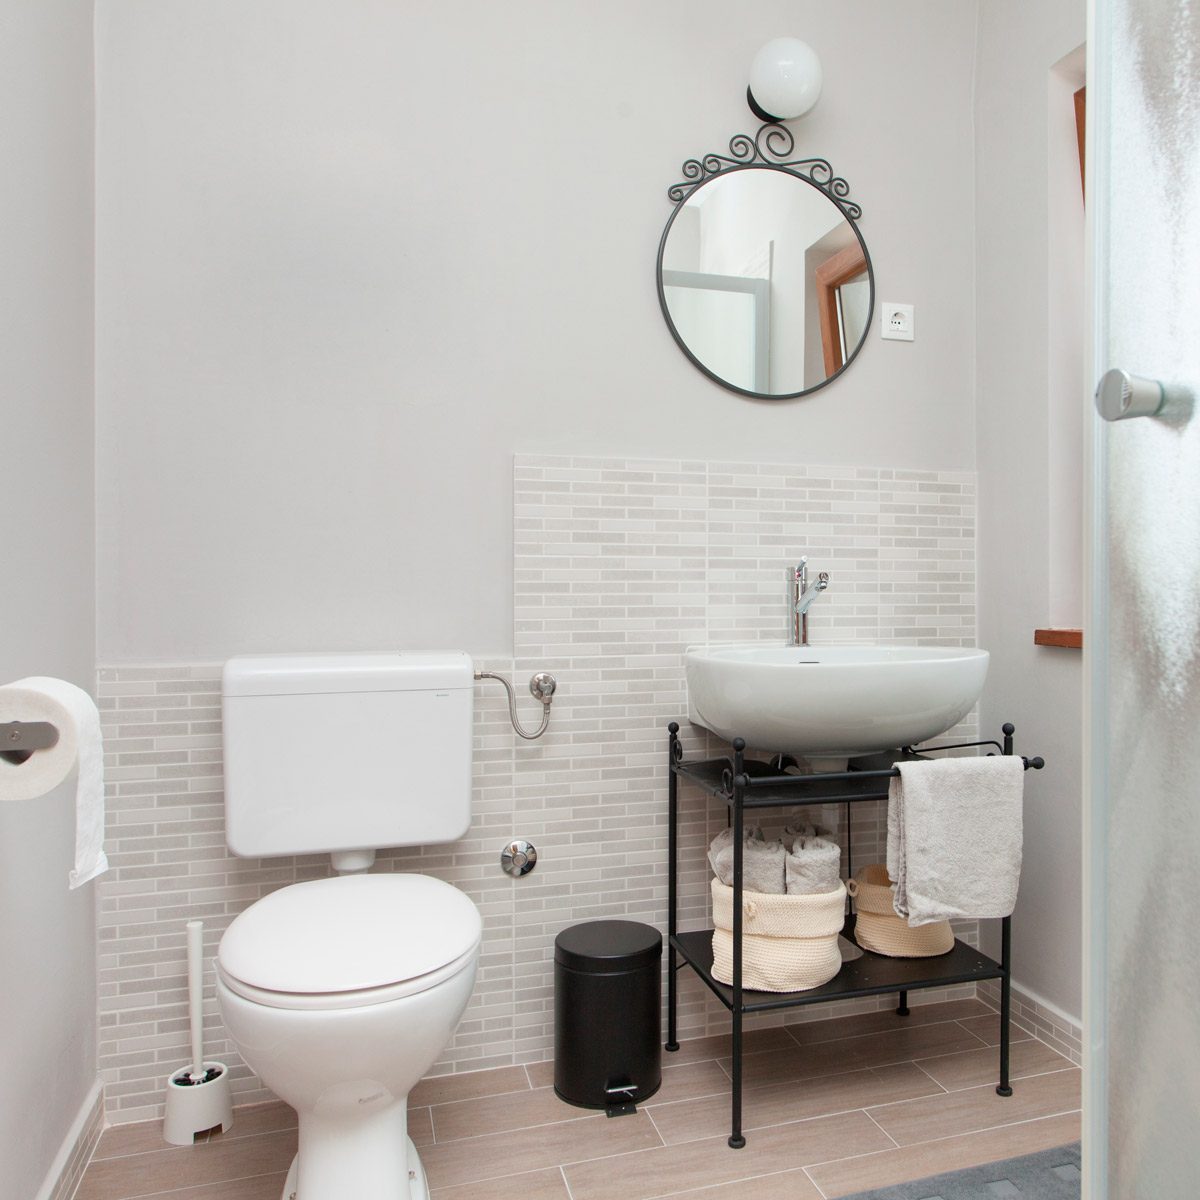 10 Small Bathroom Ideas That Make A Big Impact Family Handyman